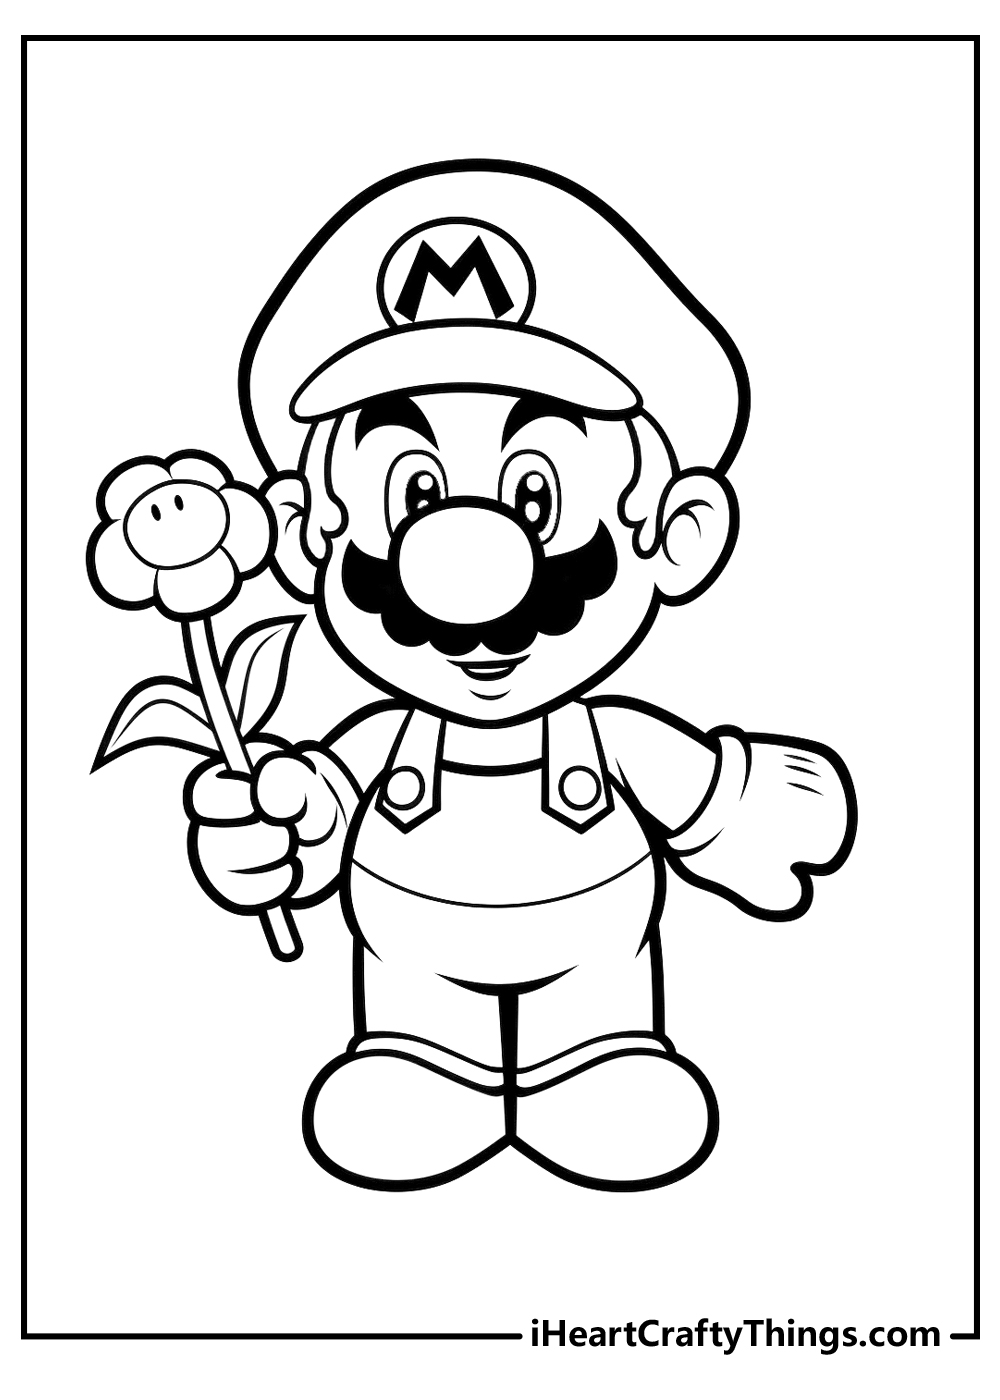 Super Mario Bros. Wonder Coloring Pages - Coloring Nation